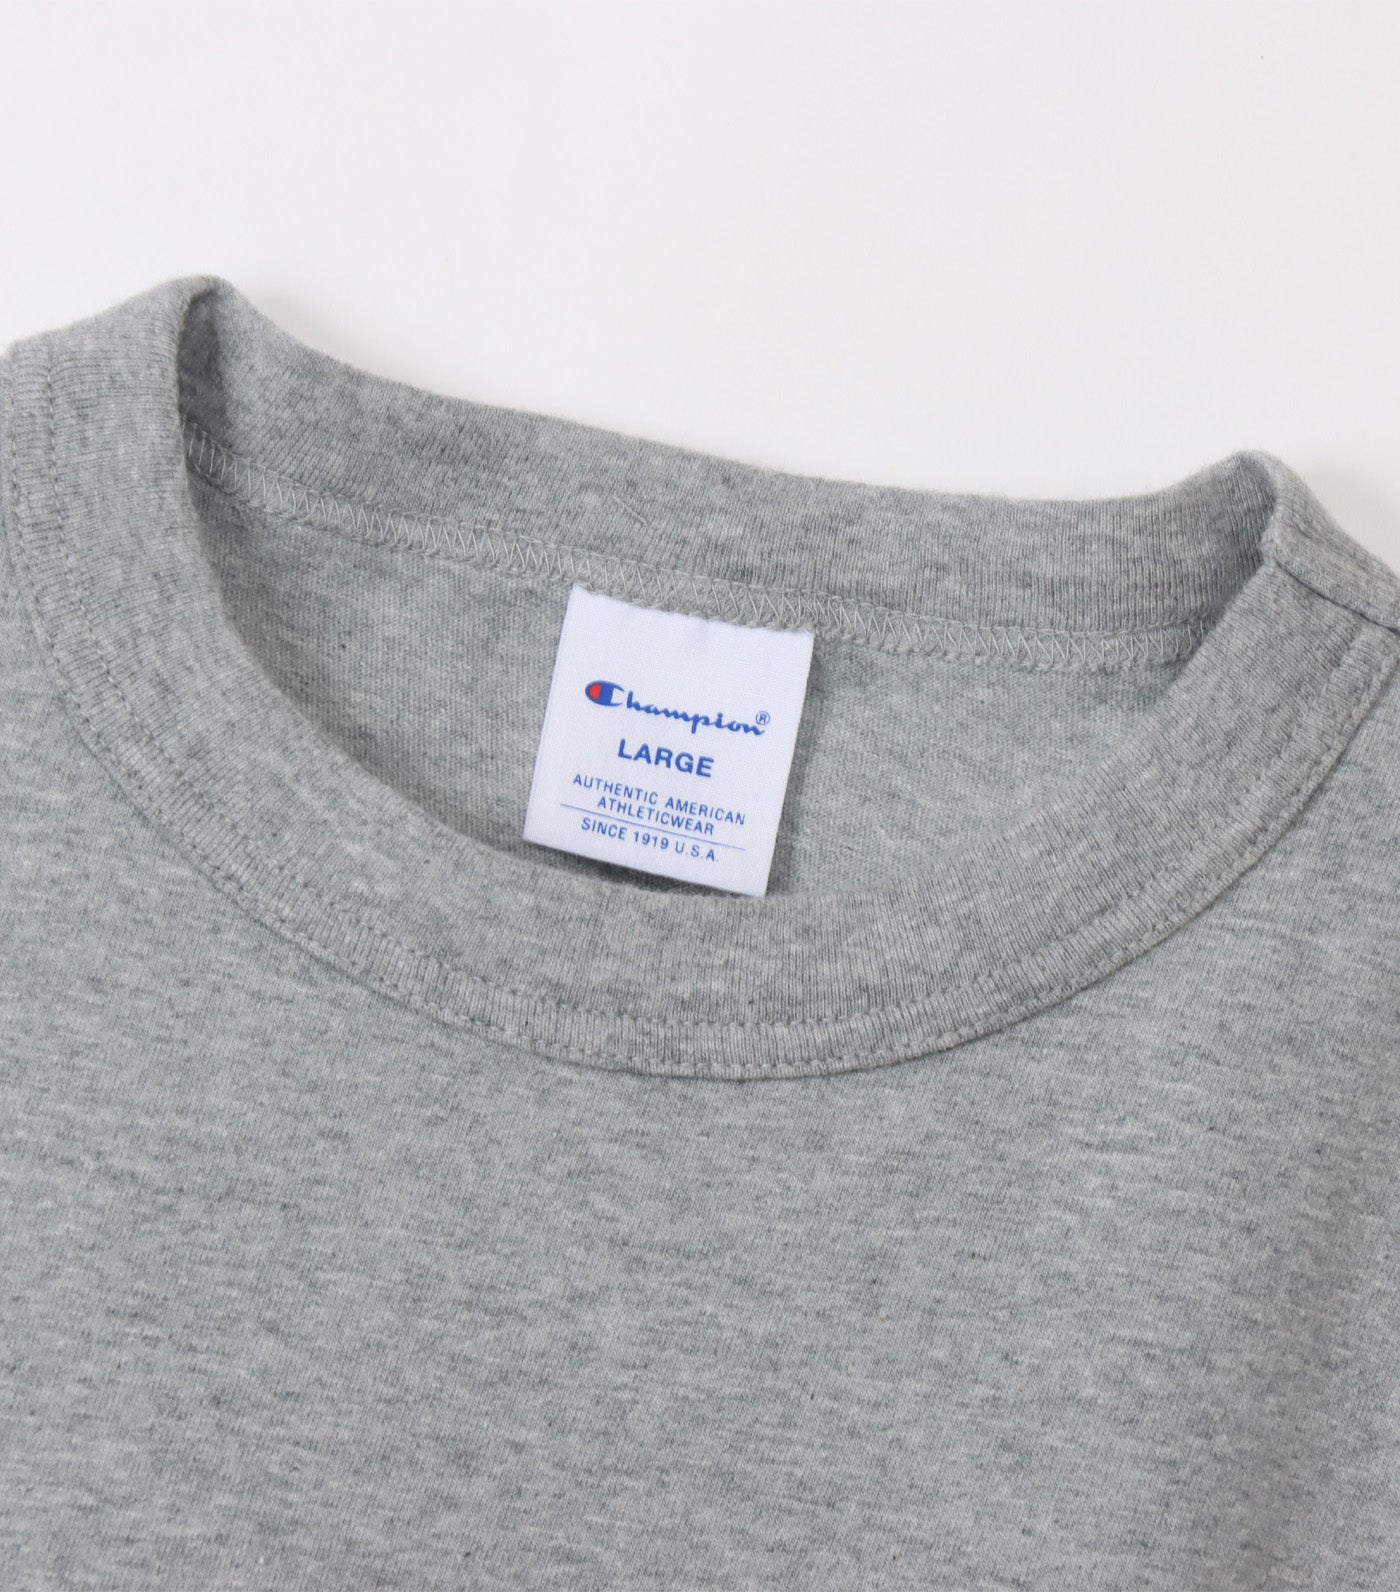 Japan Line Short Sleeve T-shirt Oxford Gray